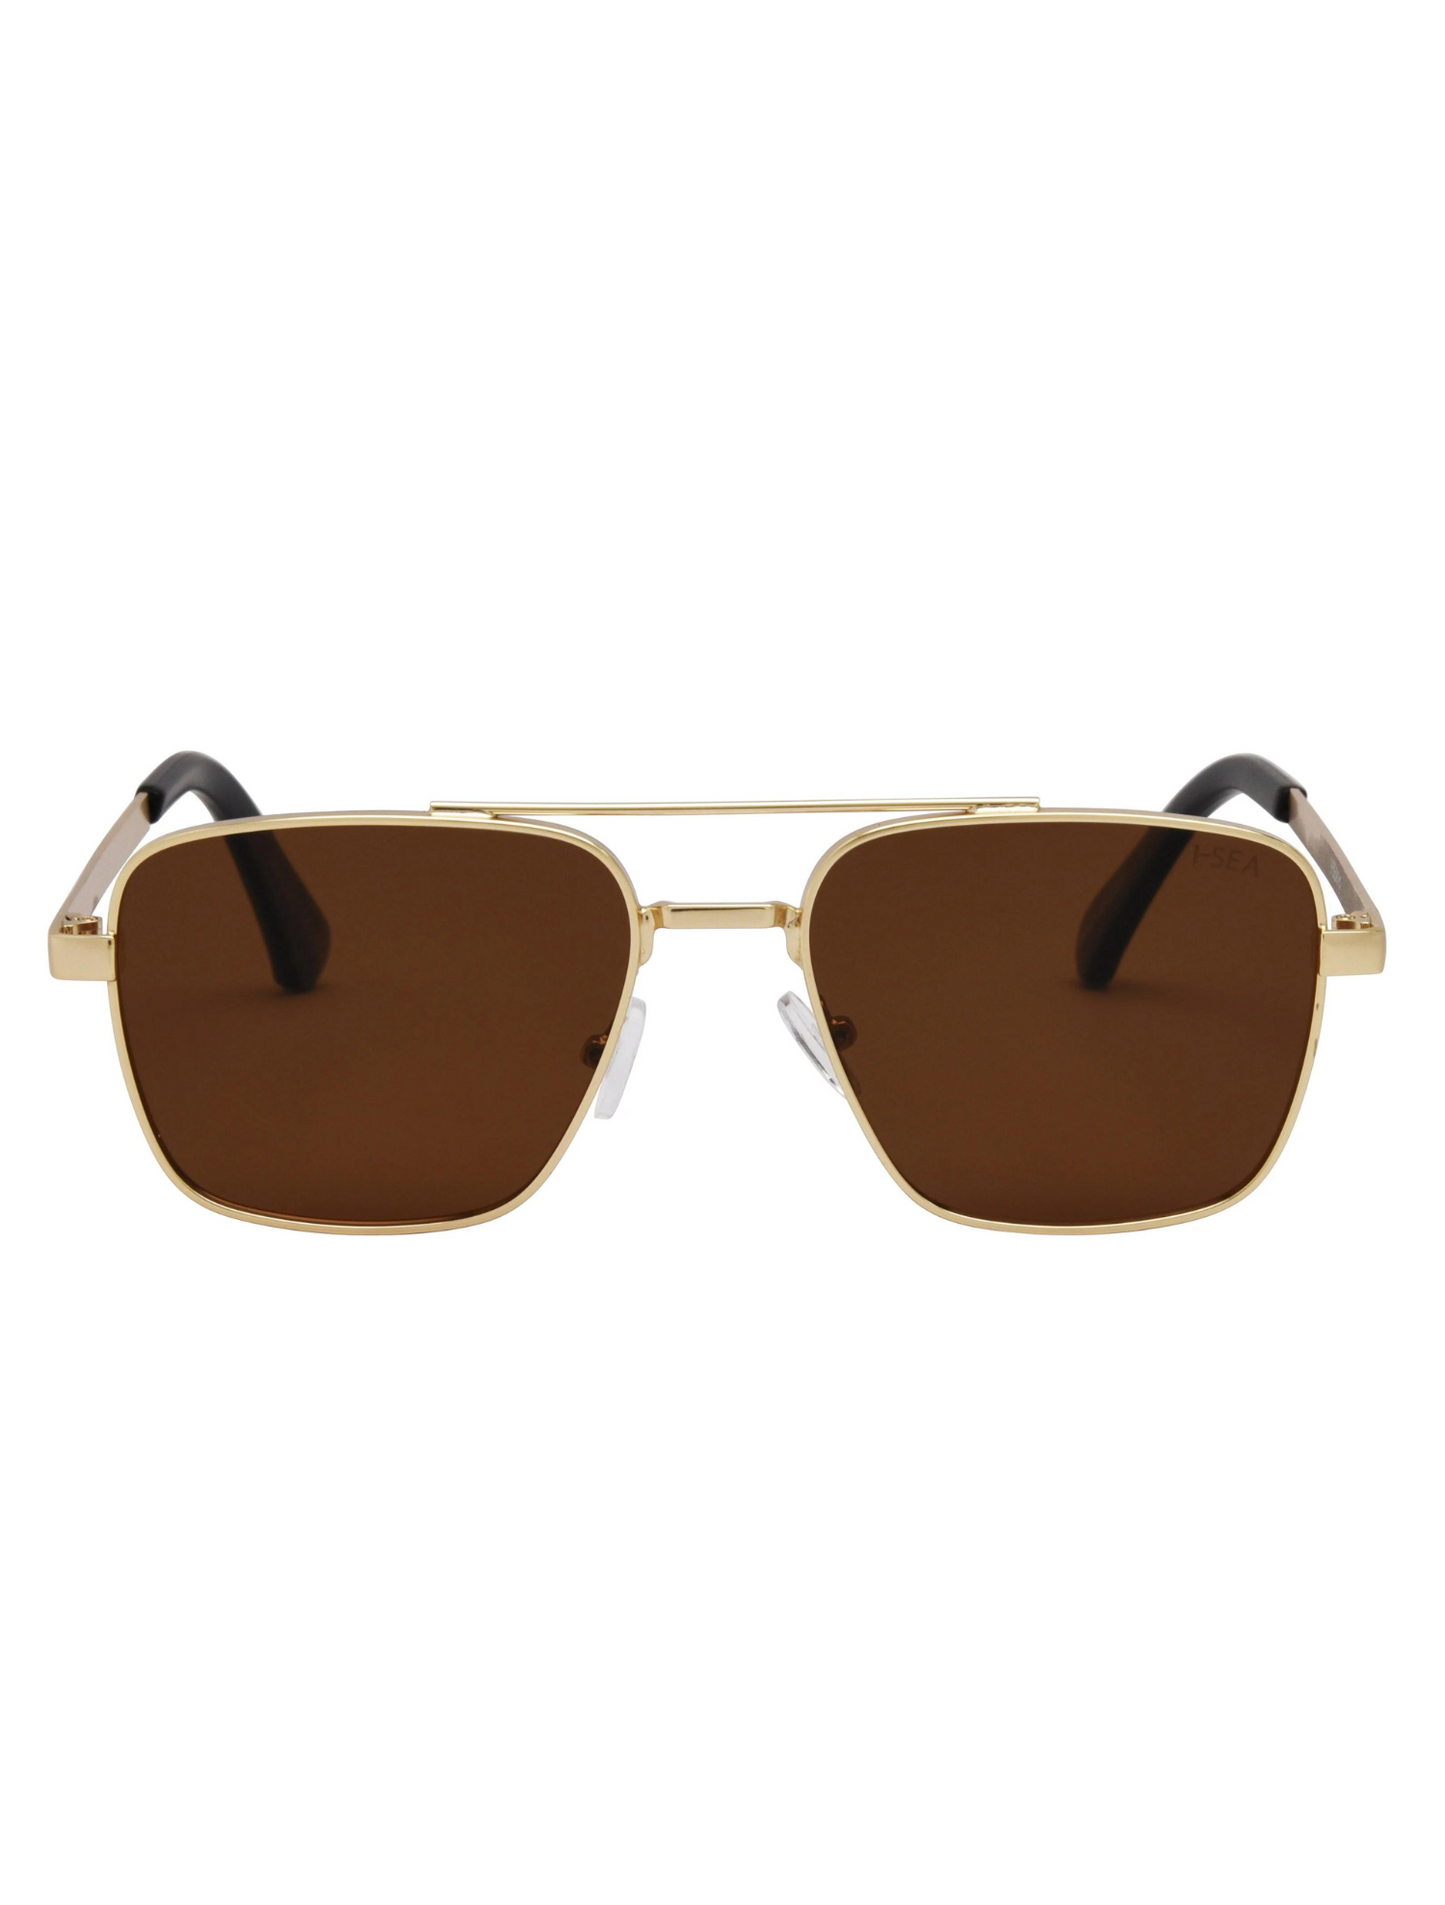 Brooks Sunglasses - Gold/Brown